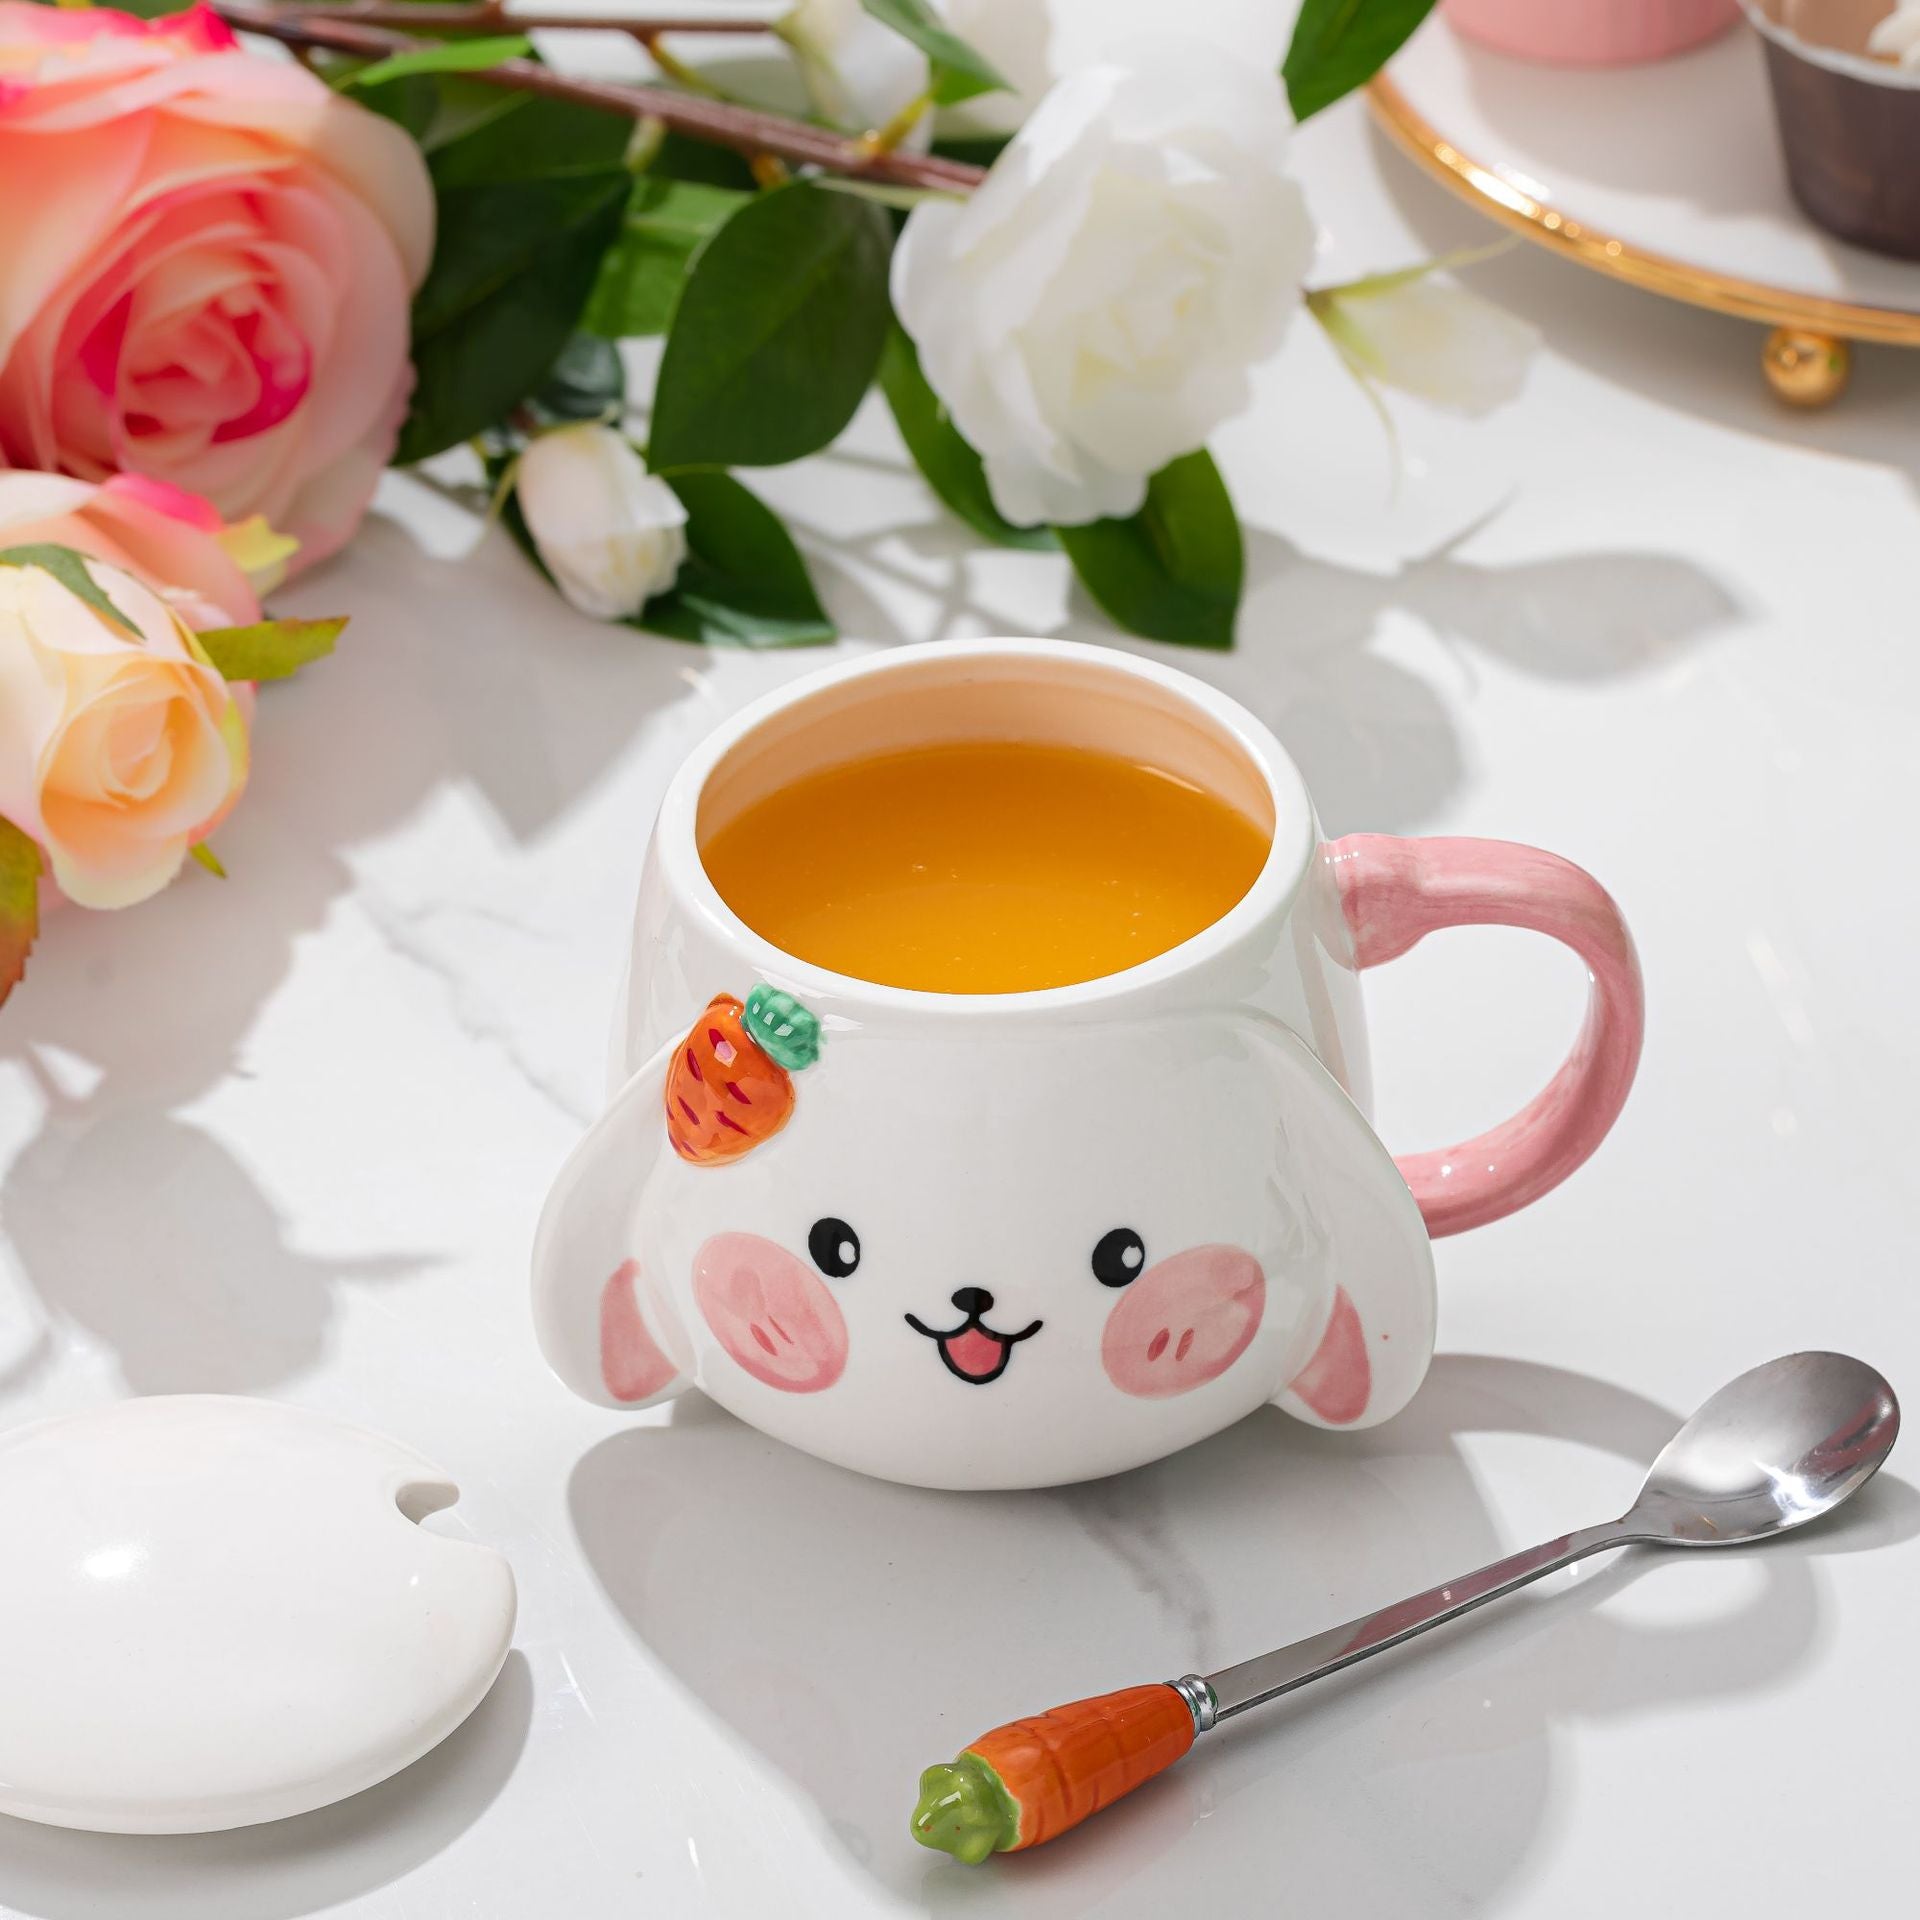 Cute Ceramic Bunny Mug With Lid & Carrot Spoon